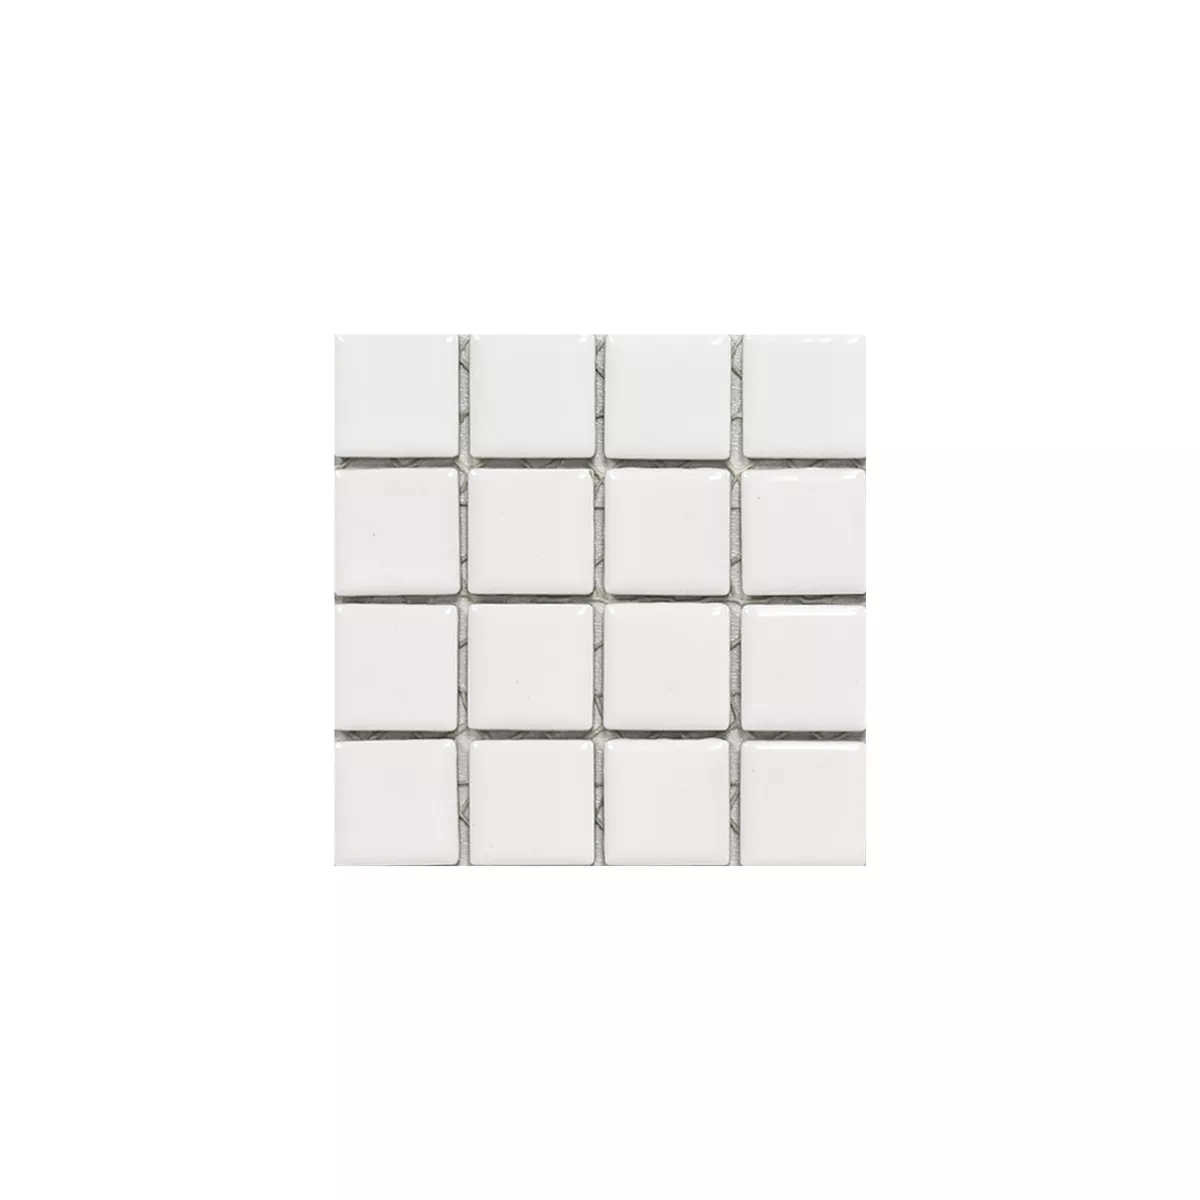 Sample Ceramic Mosaic Tiles Adrian White Mat Square 23